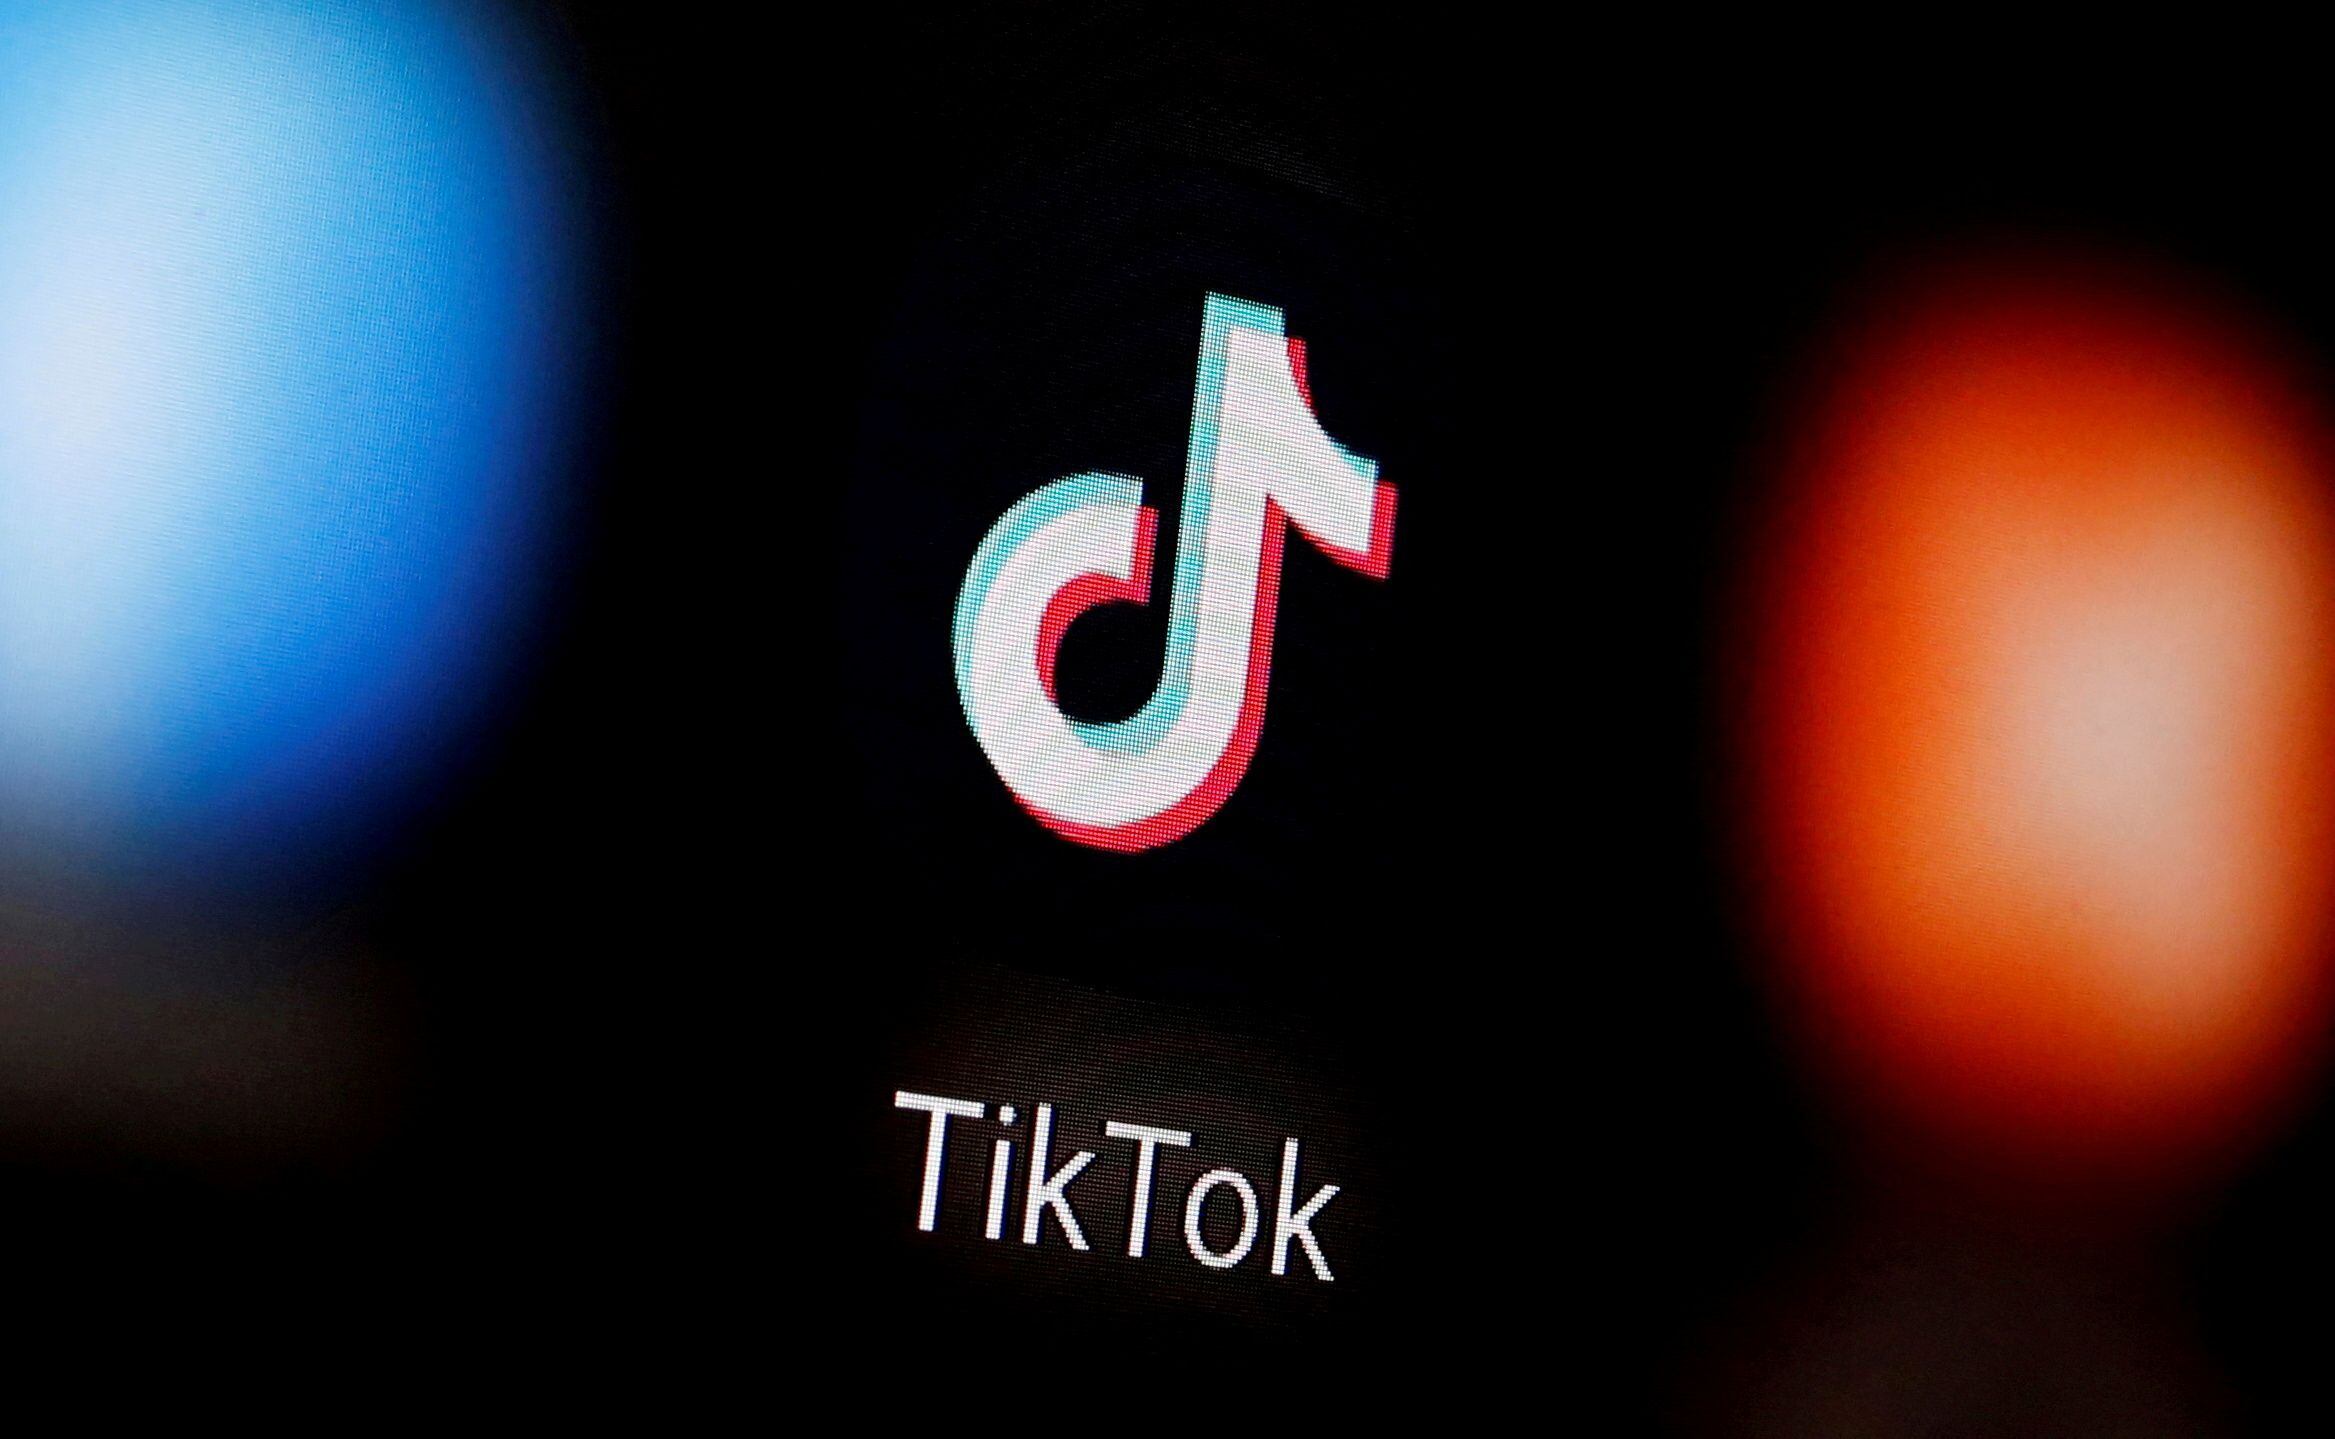 Foto de archivo ilustrativa del logo de TikTok 
Ene 6, 2020. REUTERS/Dado Ruvic/